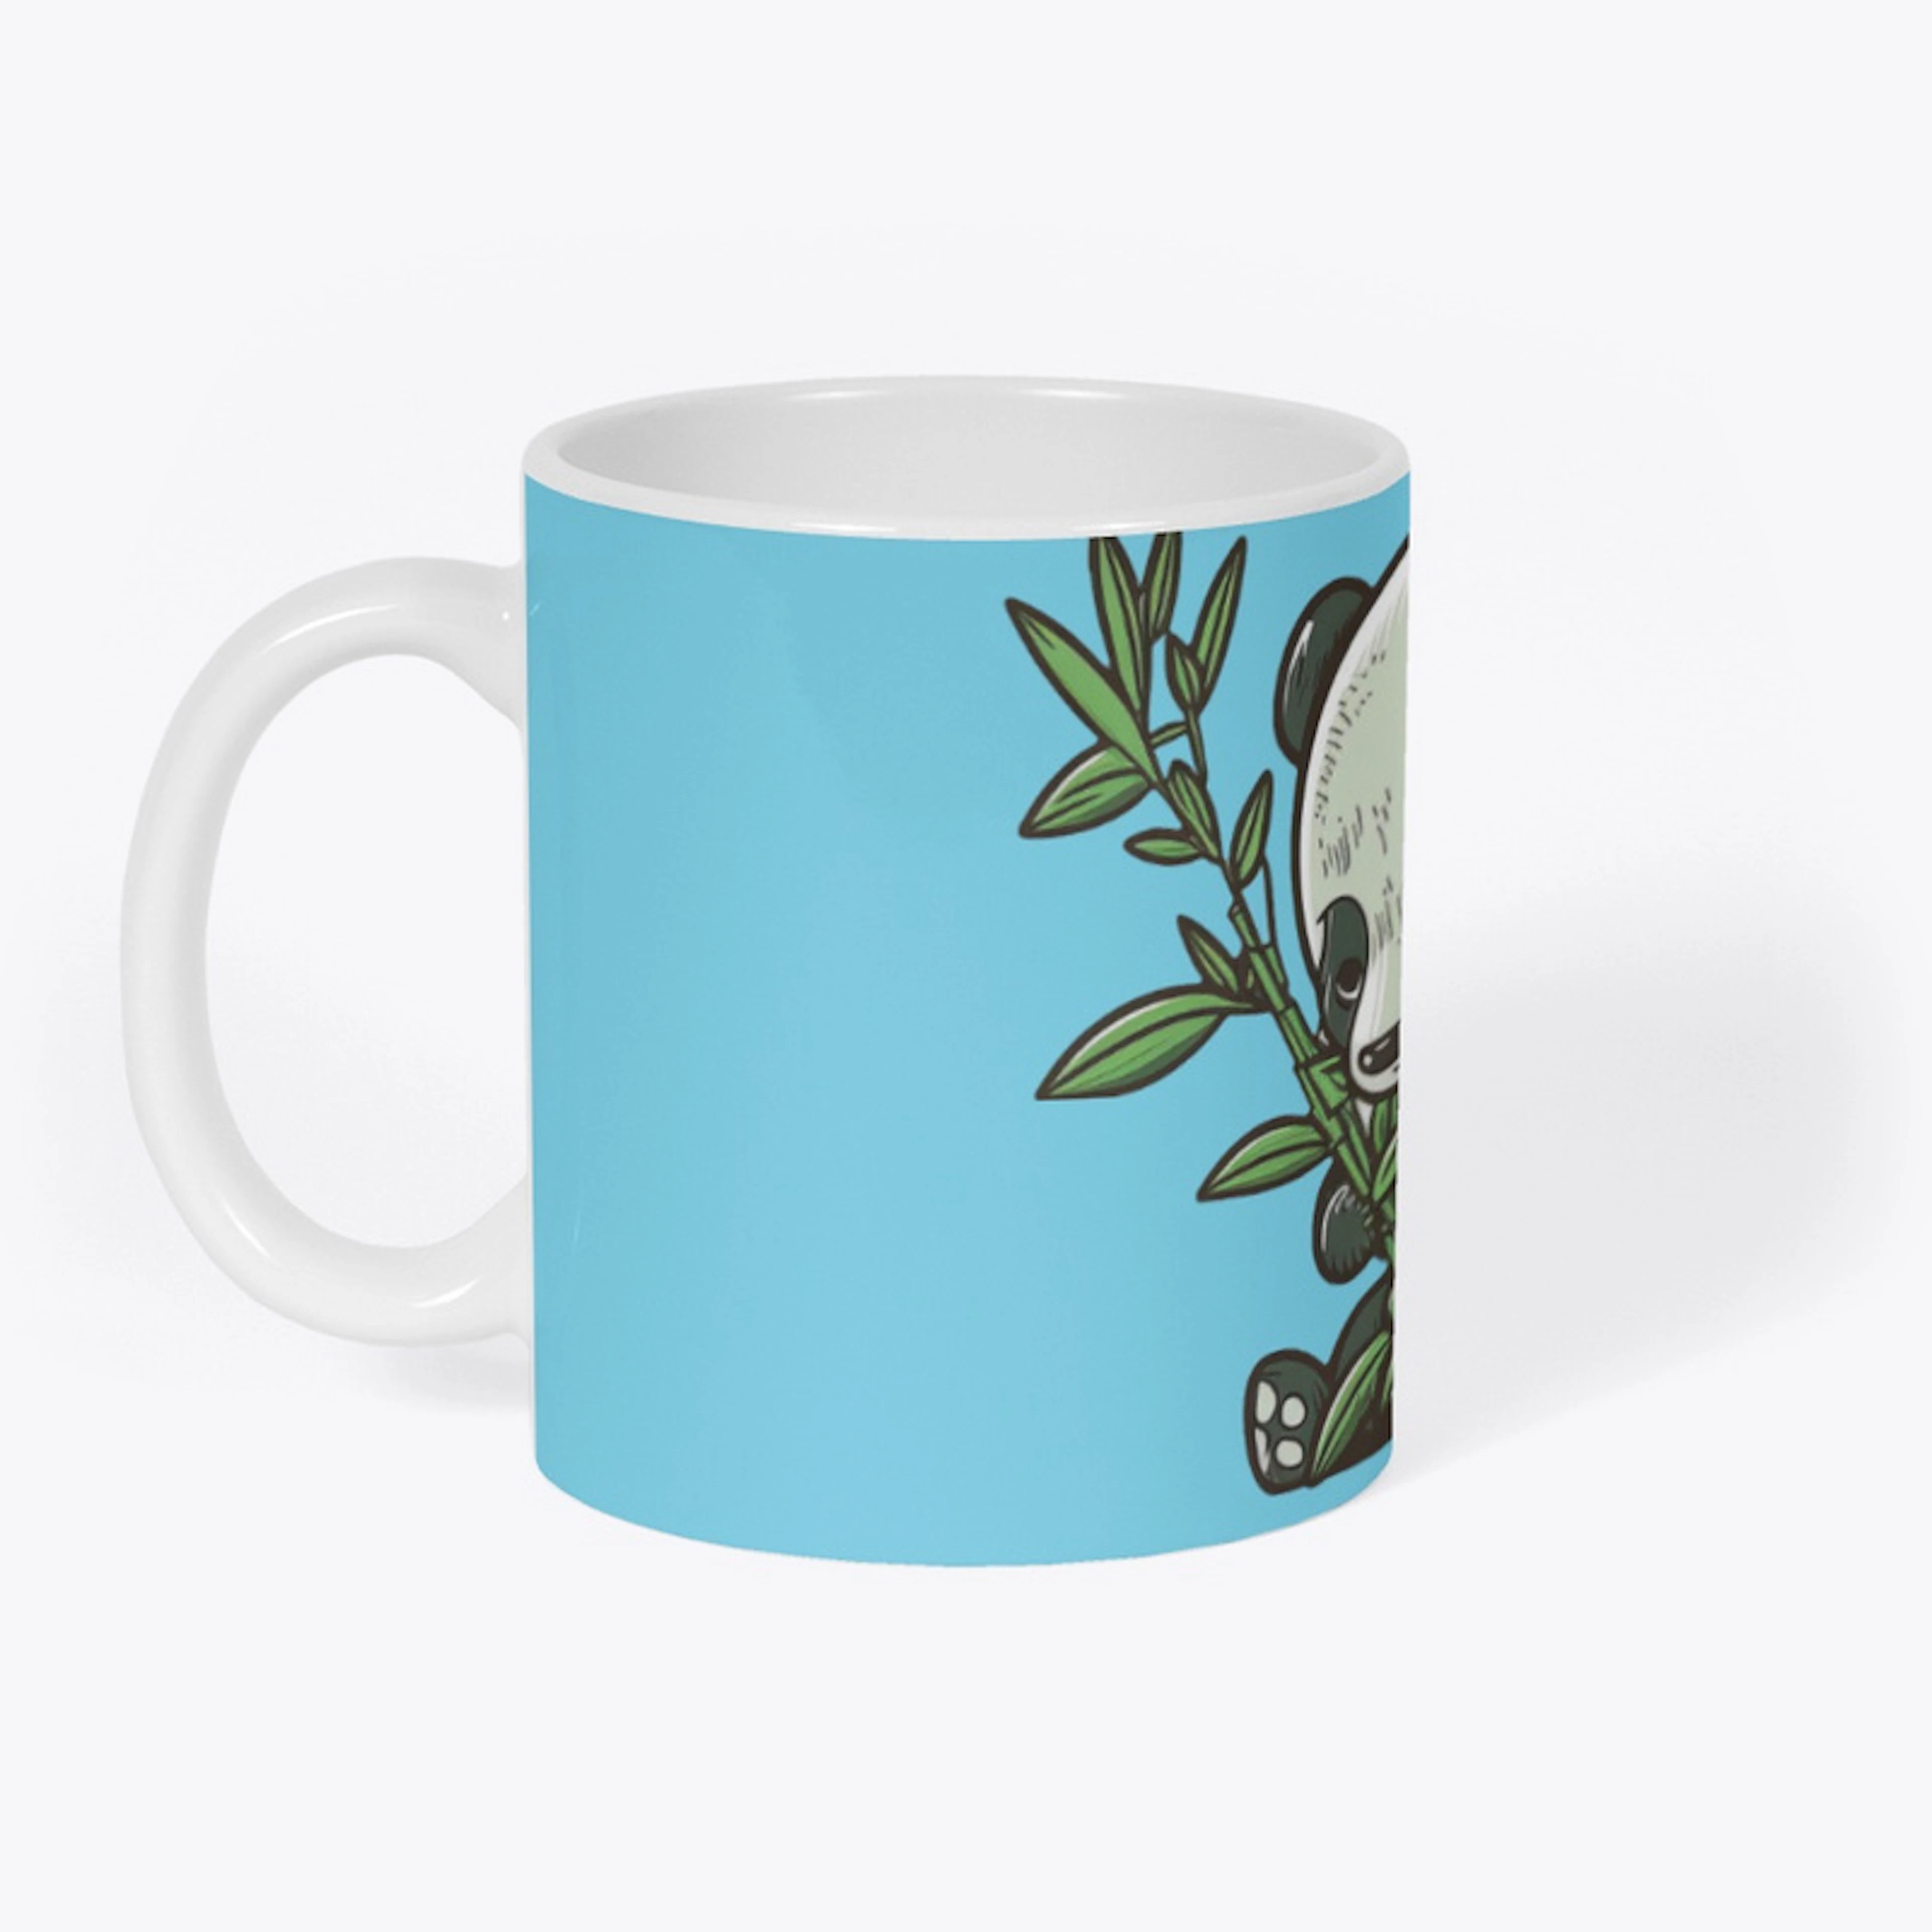 Panda-licious Mug